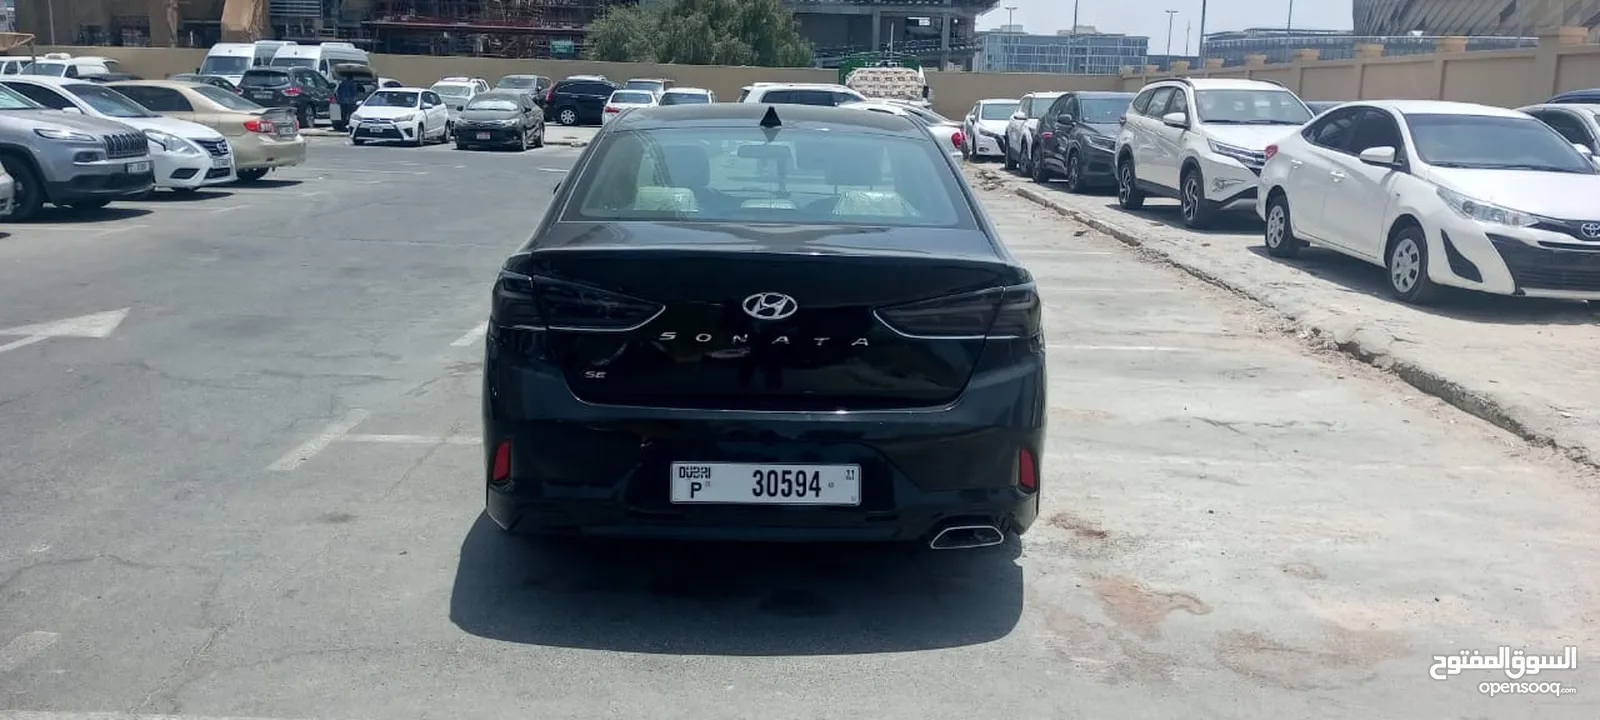 Hyundai Sonata 2018 (Reason: Having SUV in use)